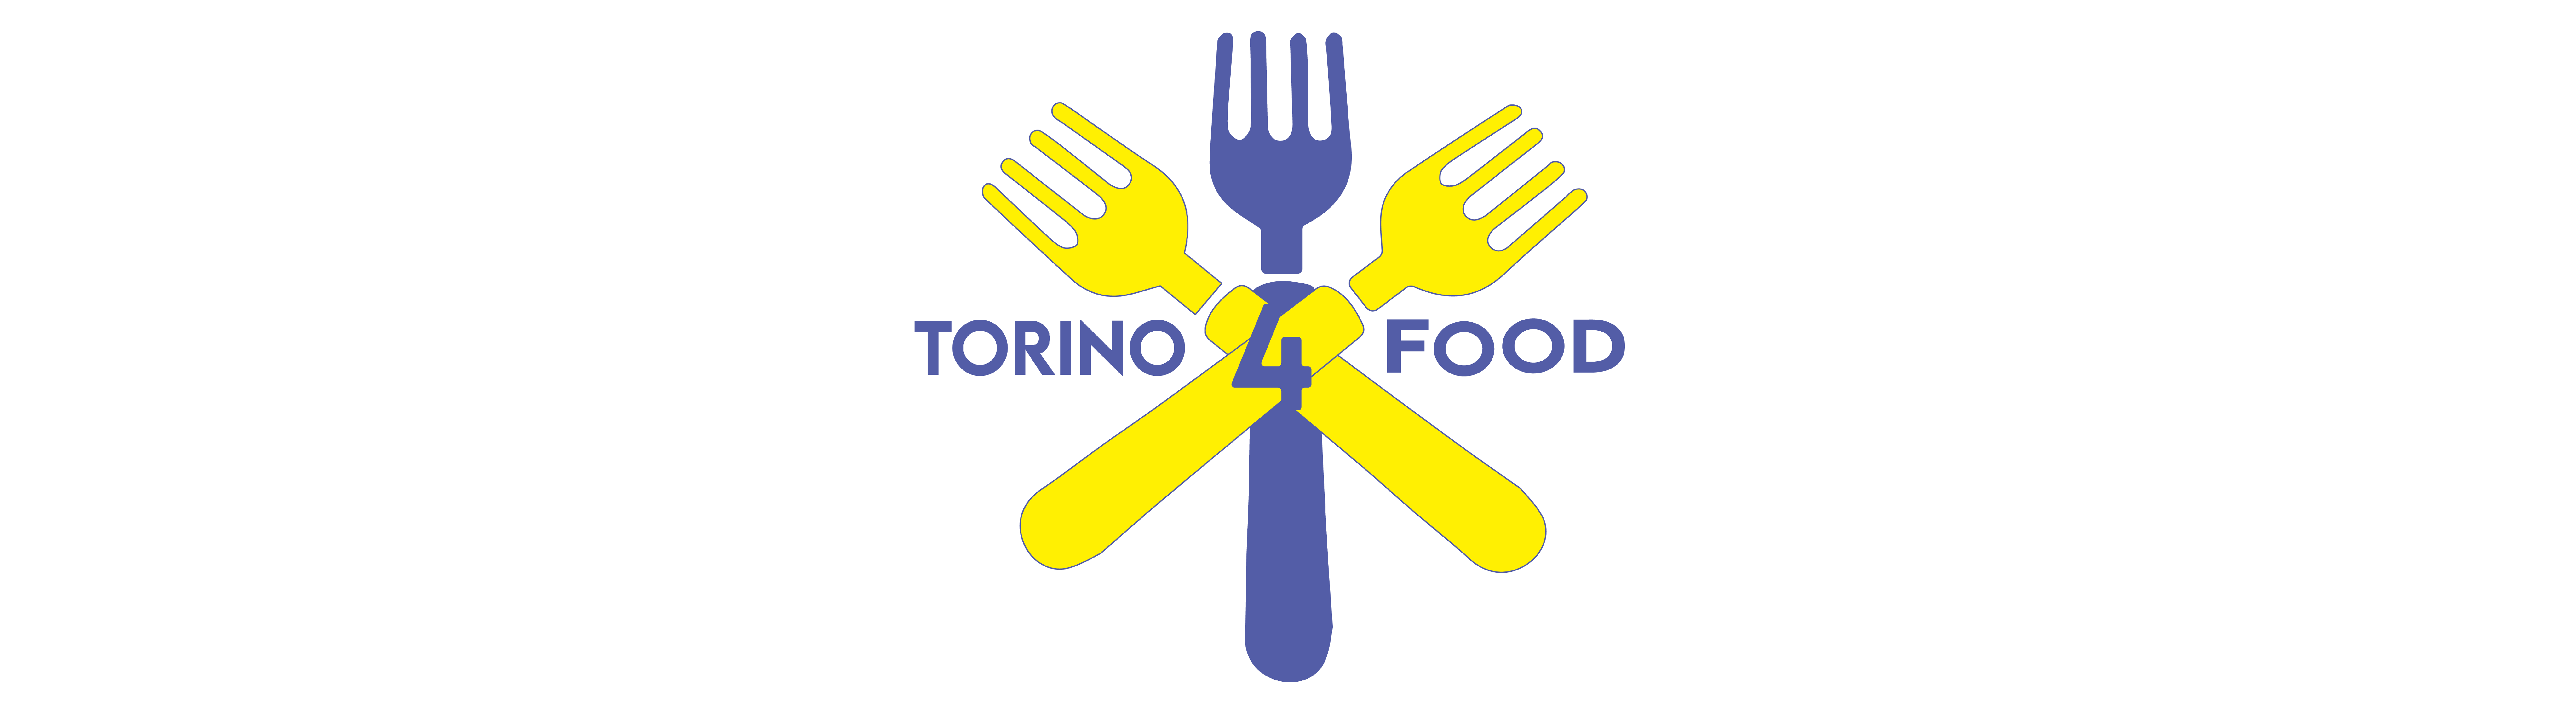 Torino4Food